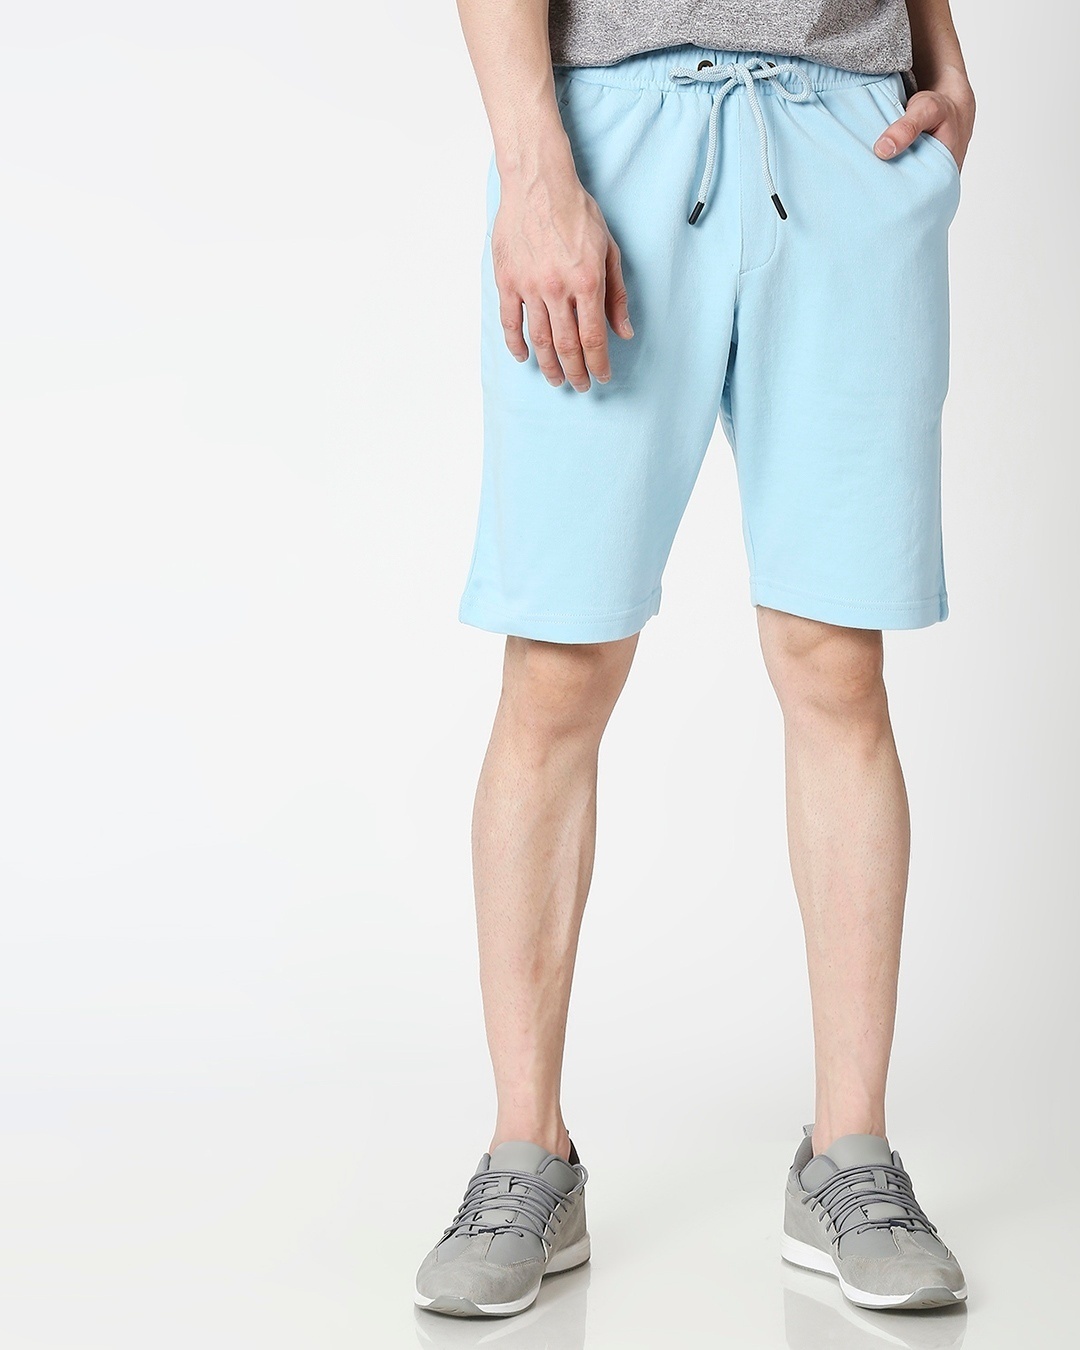 Buy Sky Blue Casual Shorts for Men blue Online at Bewakoof